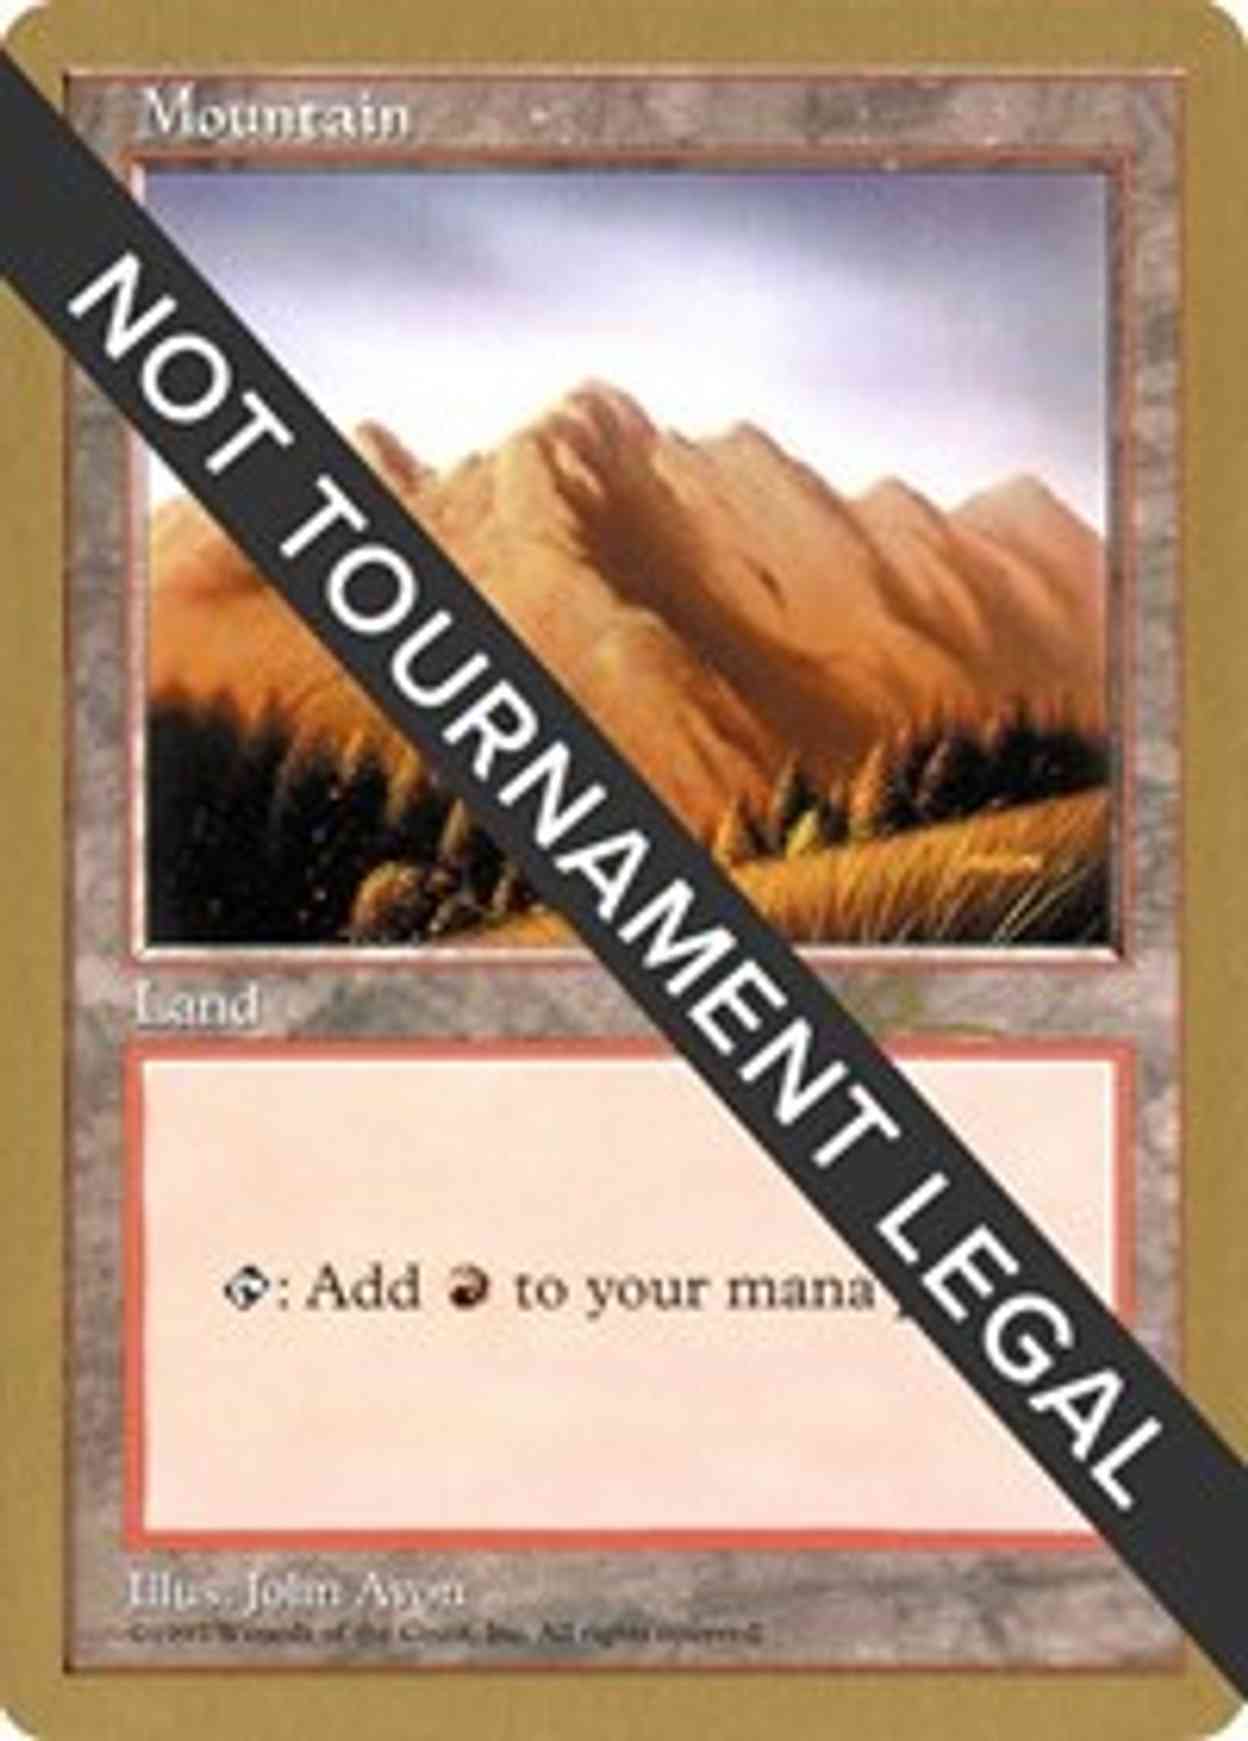 Mountain (432) - 1997 Paul McCabe (5ED) magic card front